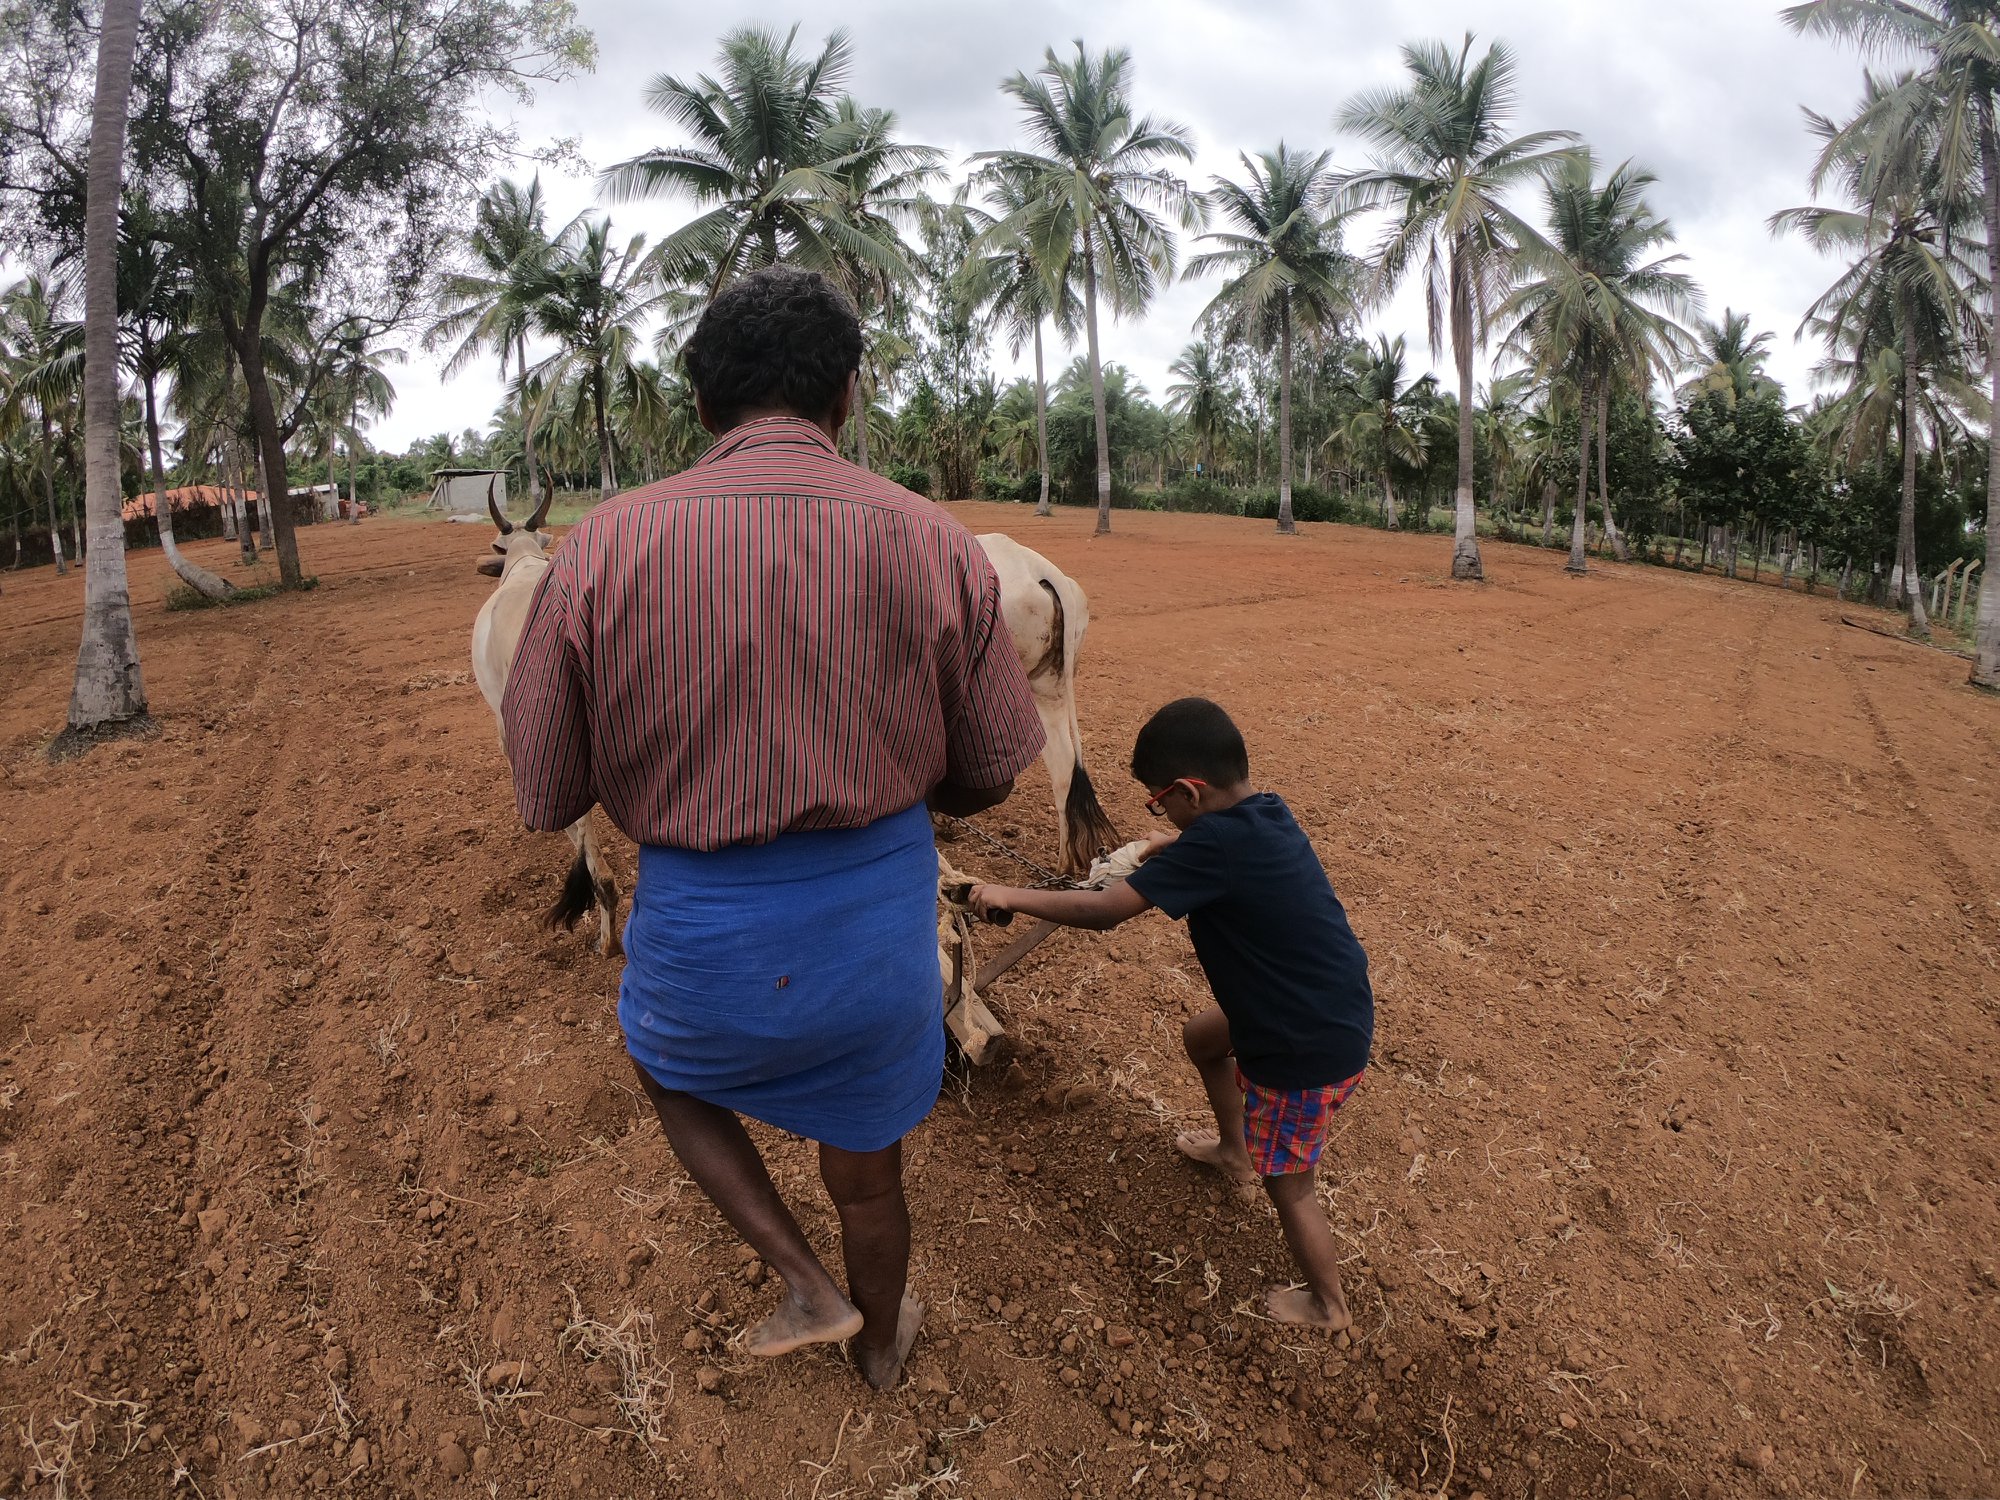 Nandu trying his hand at tilling the soil